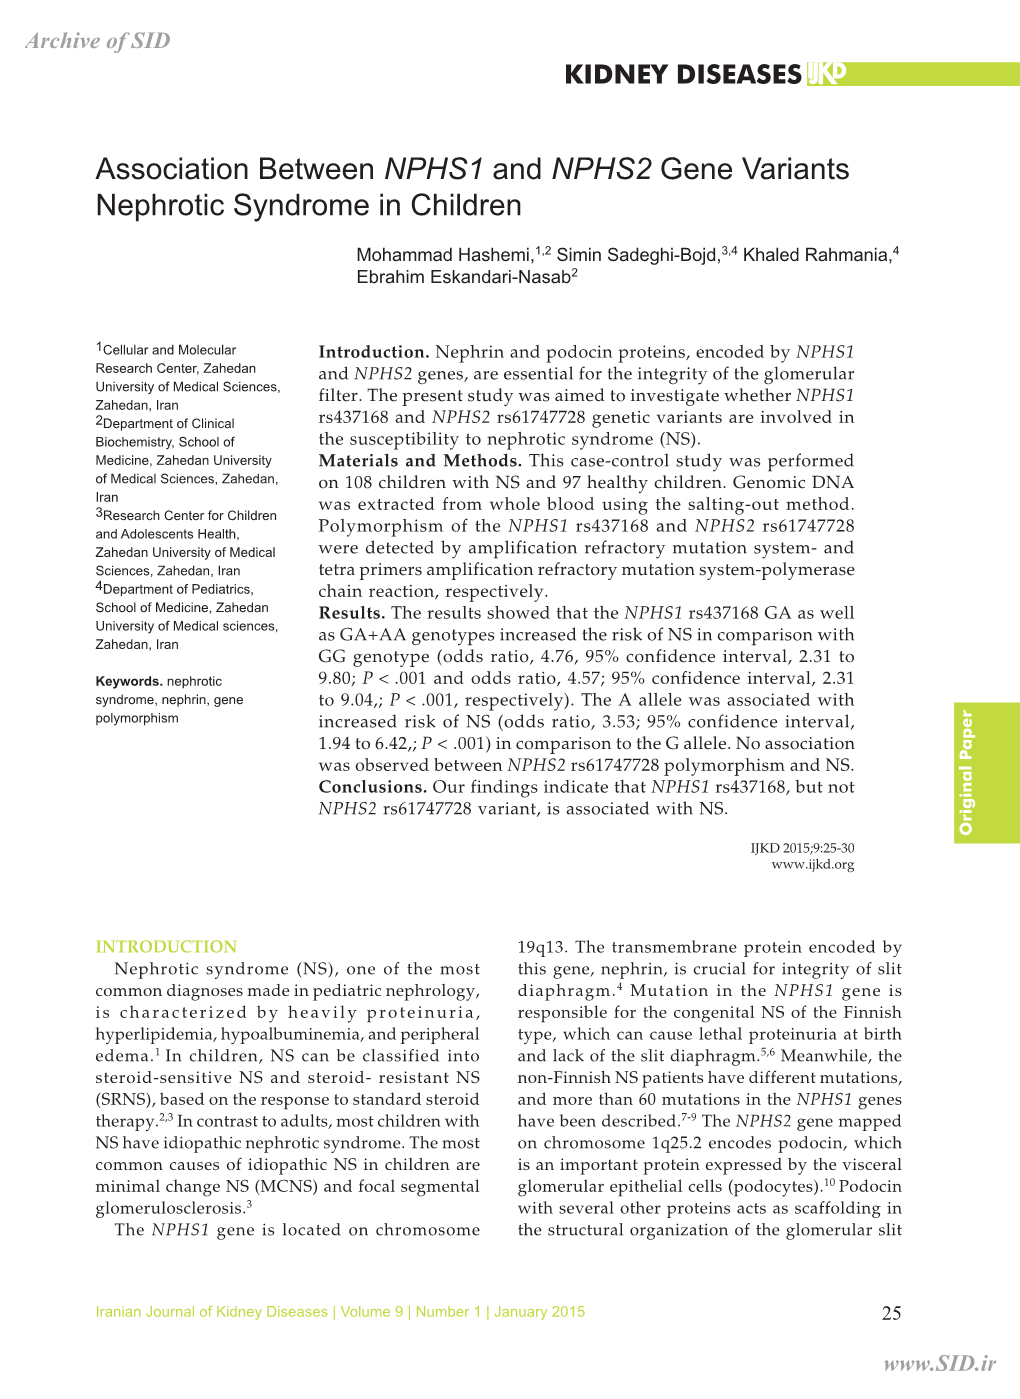 Association Between NPHS1 and NPHS2 Gene Variants Nephrotic Syndrome in Children